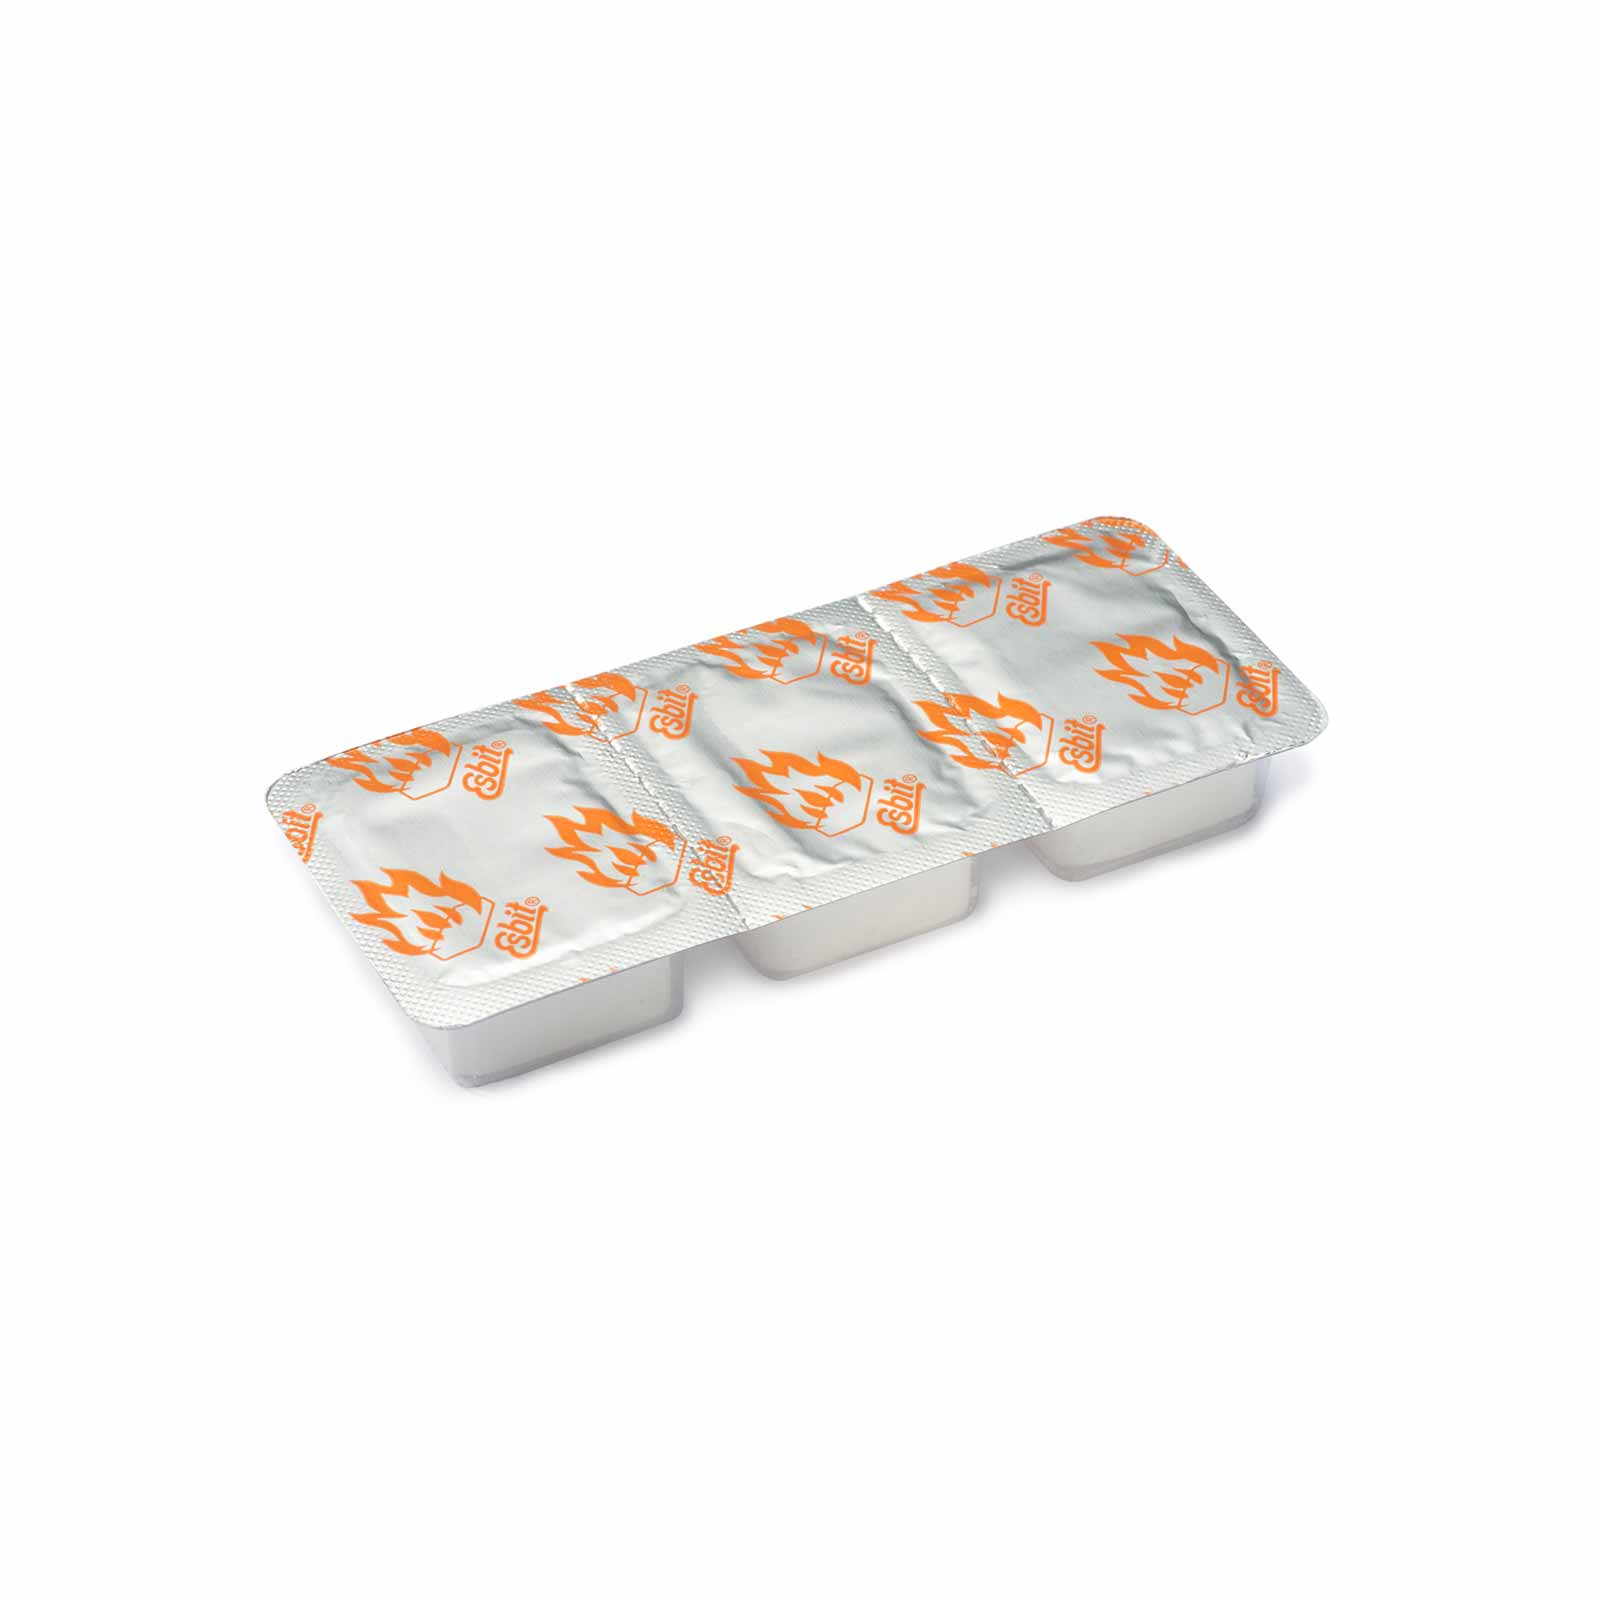 Esbit Trockenbrennstoff-Tabletten 12x14g in Blister-Verpackung